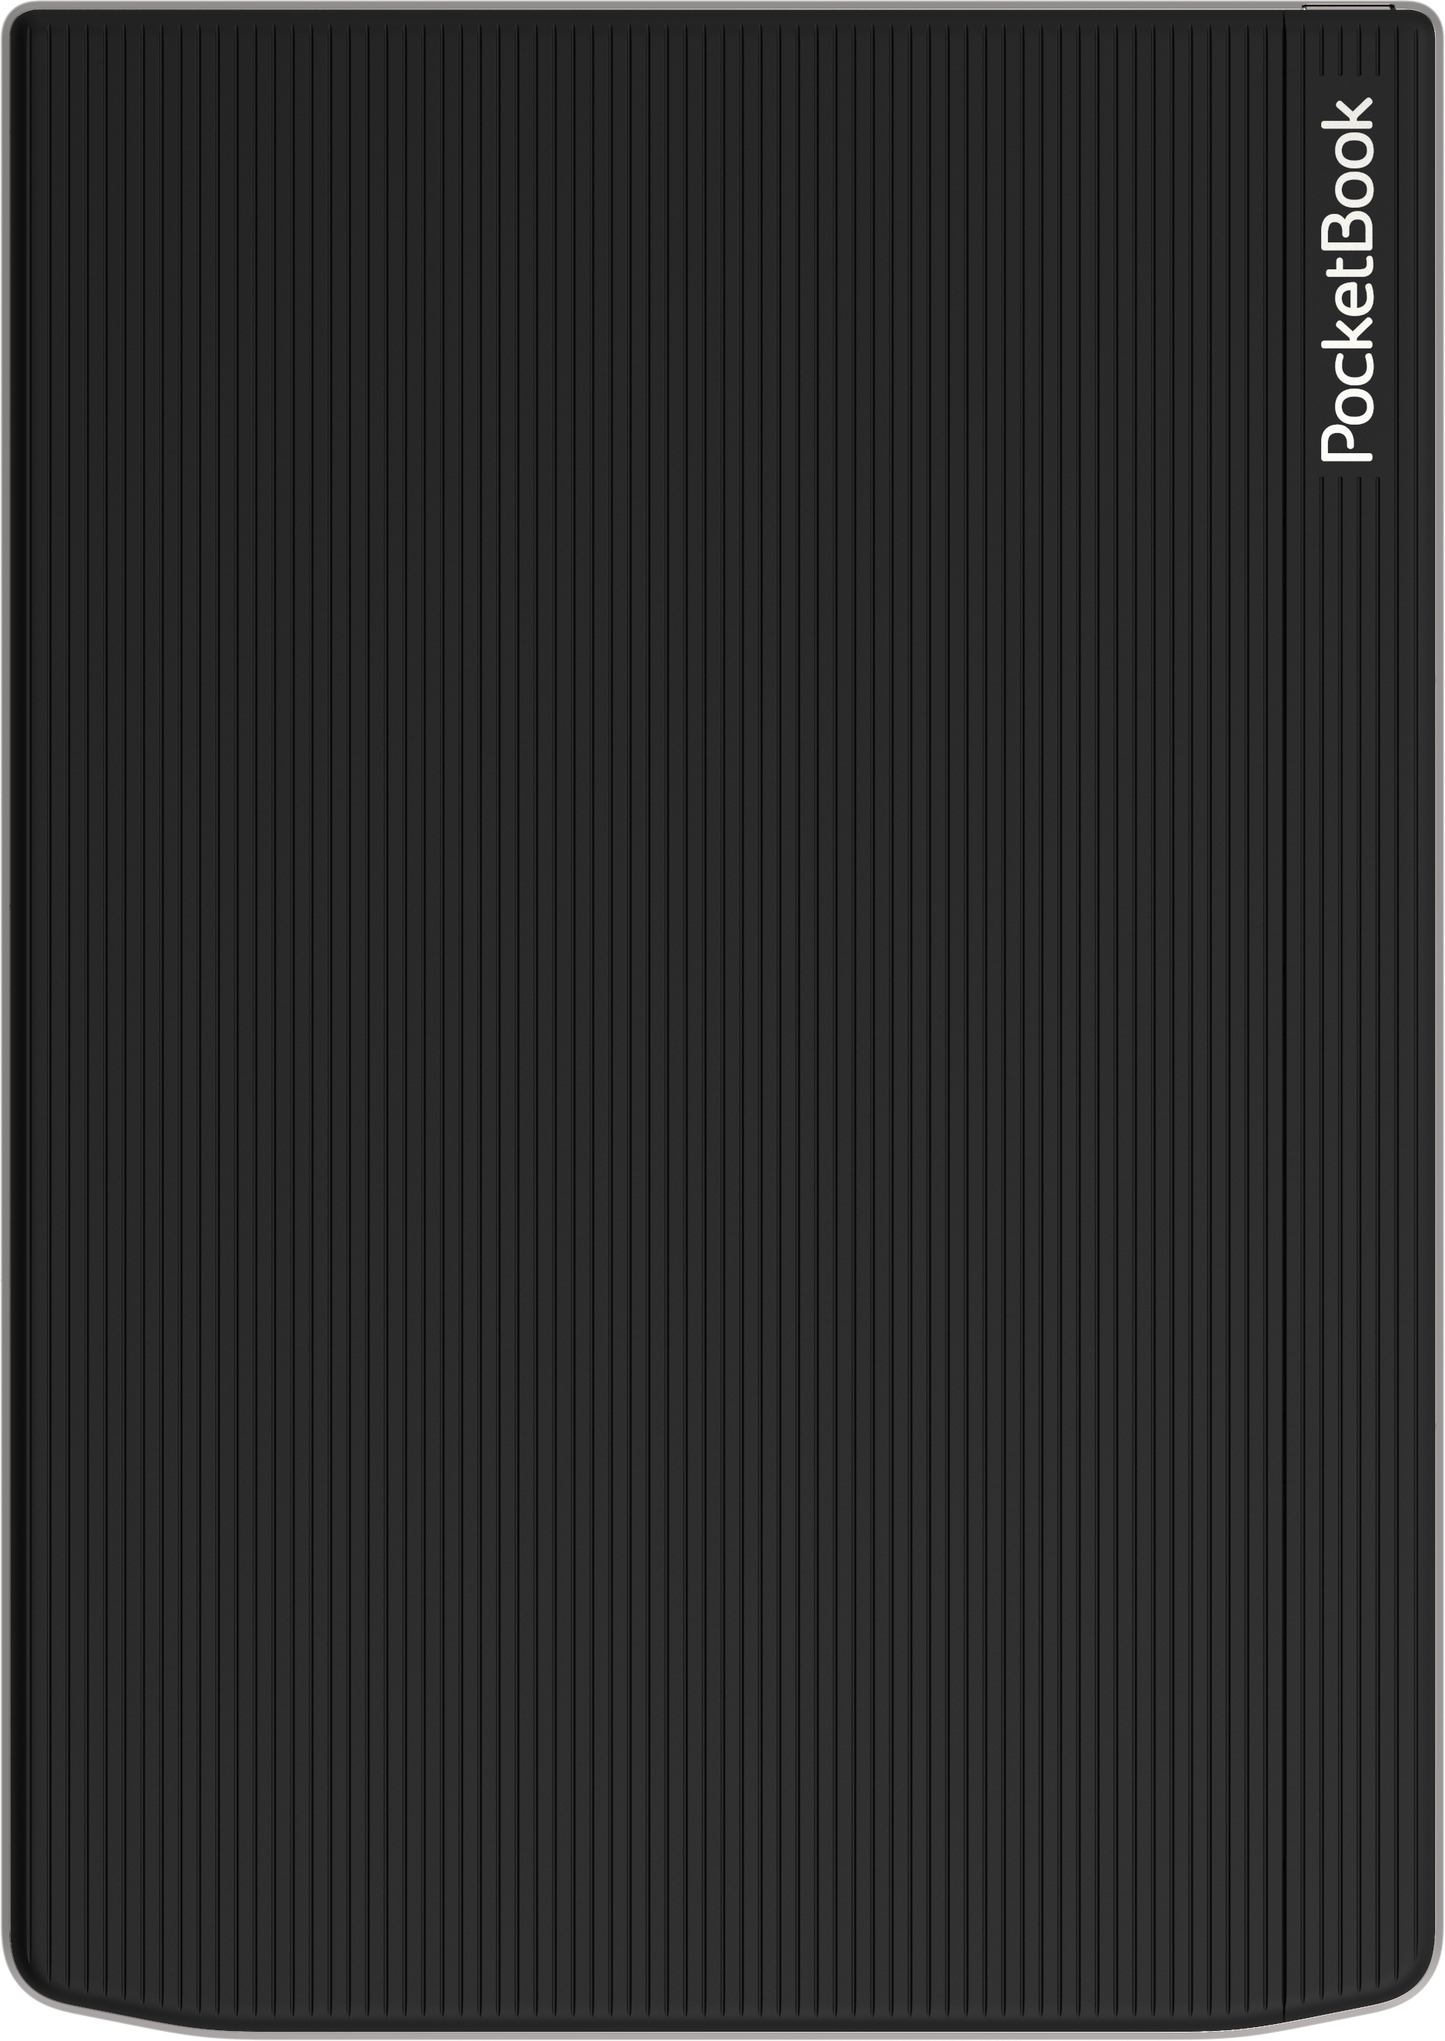 Pocketbook InkPad 4 - Latest Generation